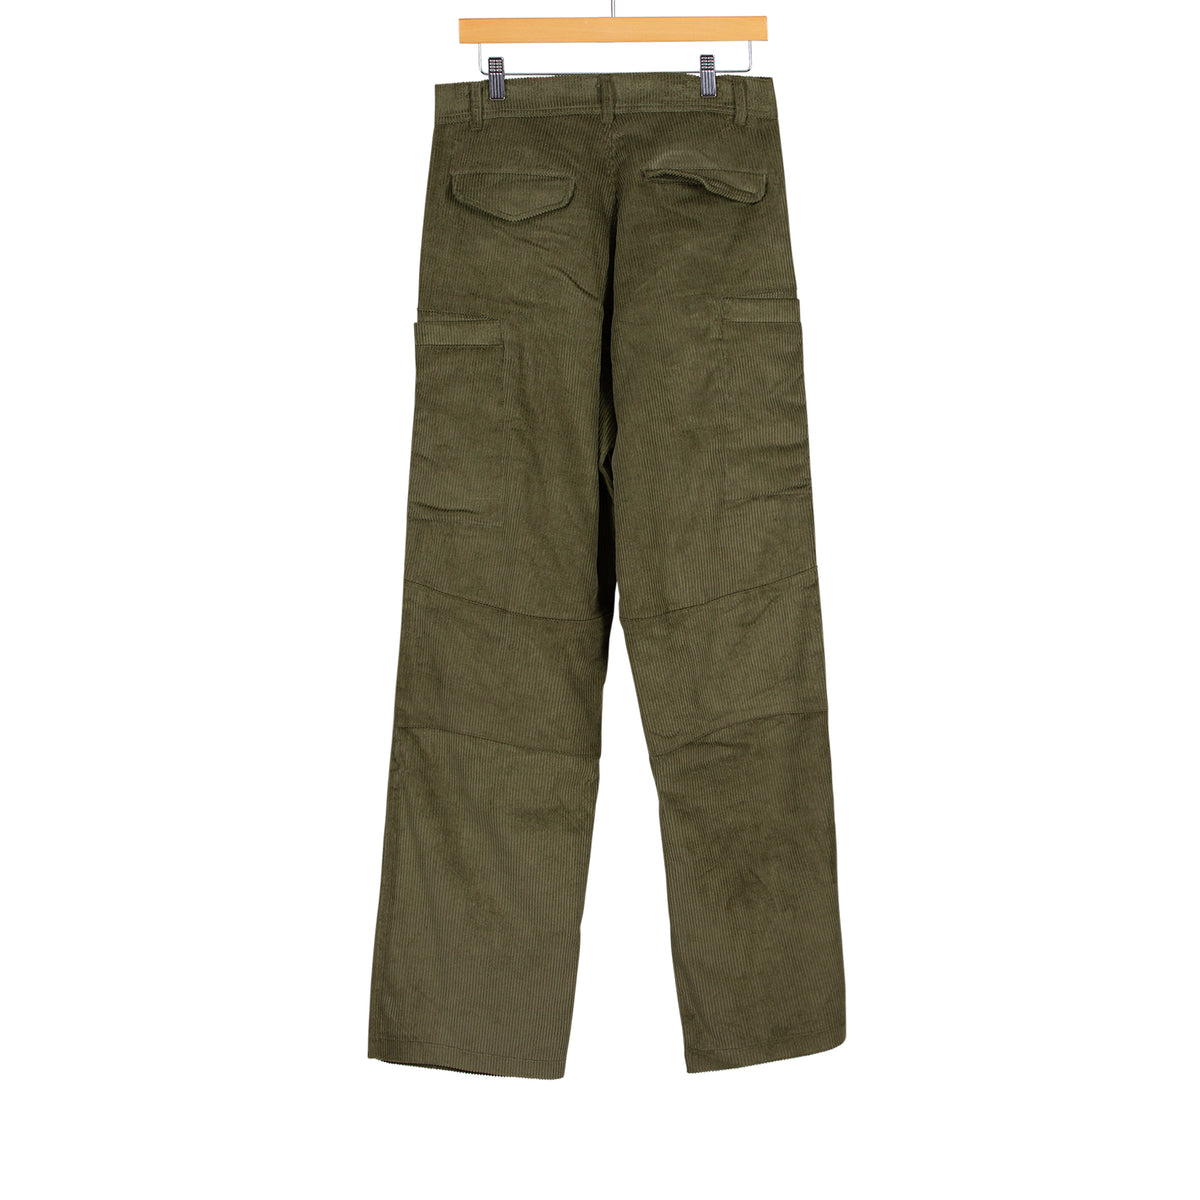 Kapital Wallaby cargo pants in green corduroy